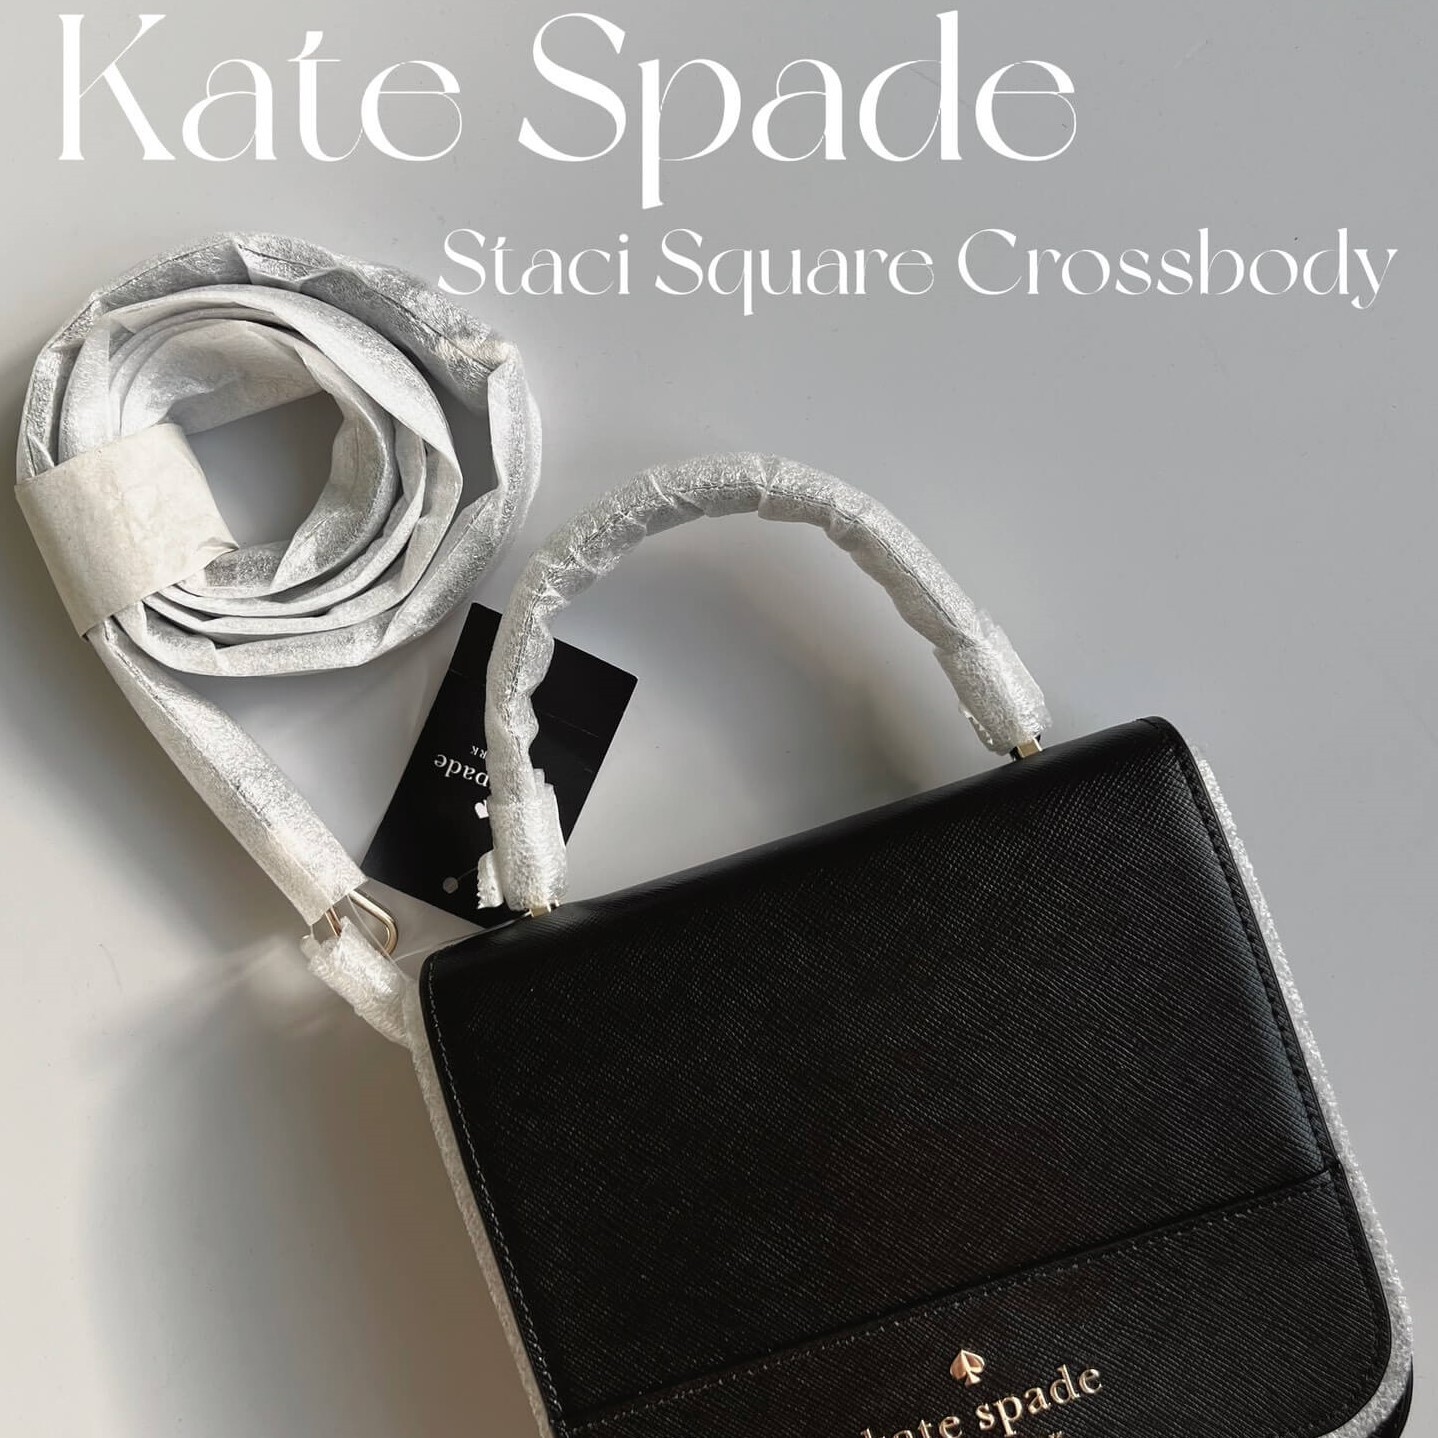 NWT Kate Spade Staci Square Crossbody Black Leather K7342